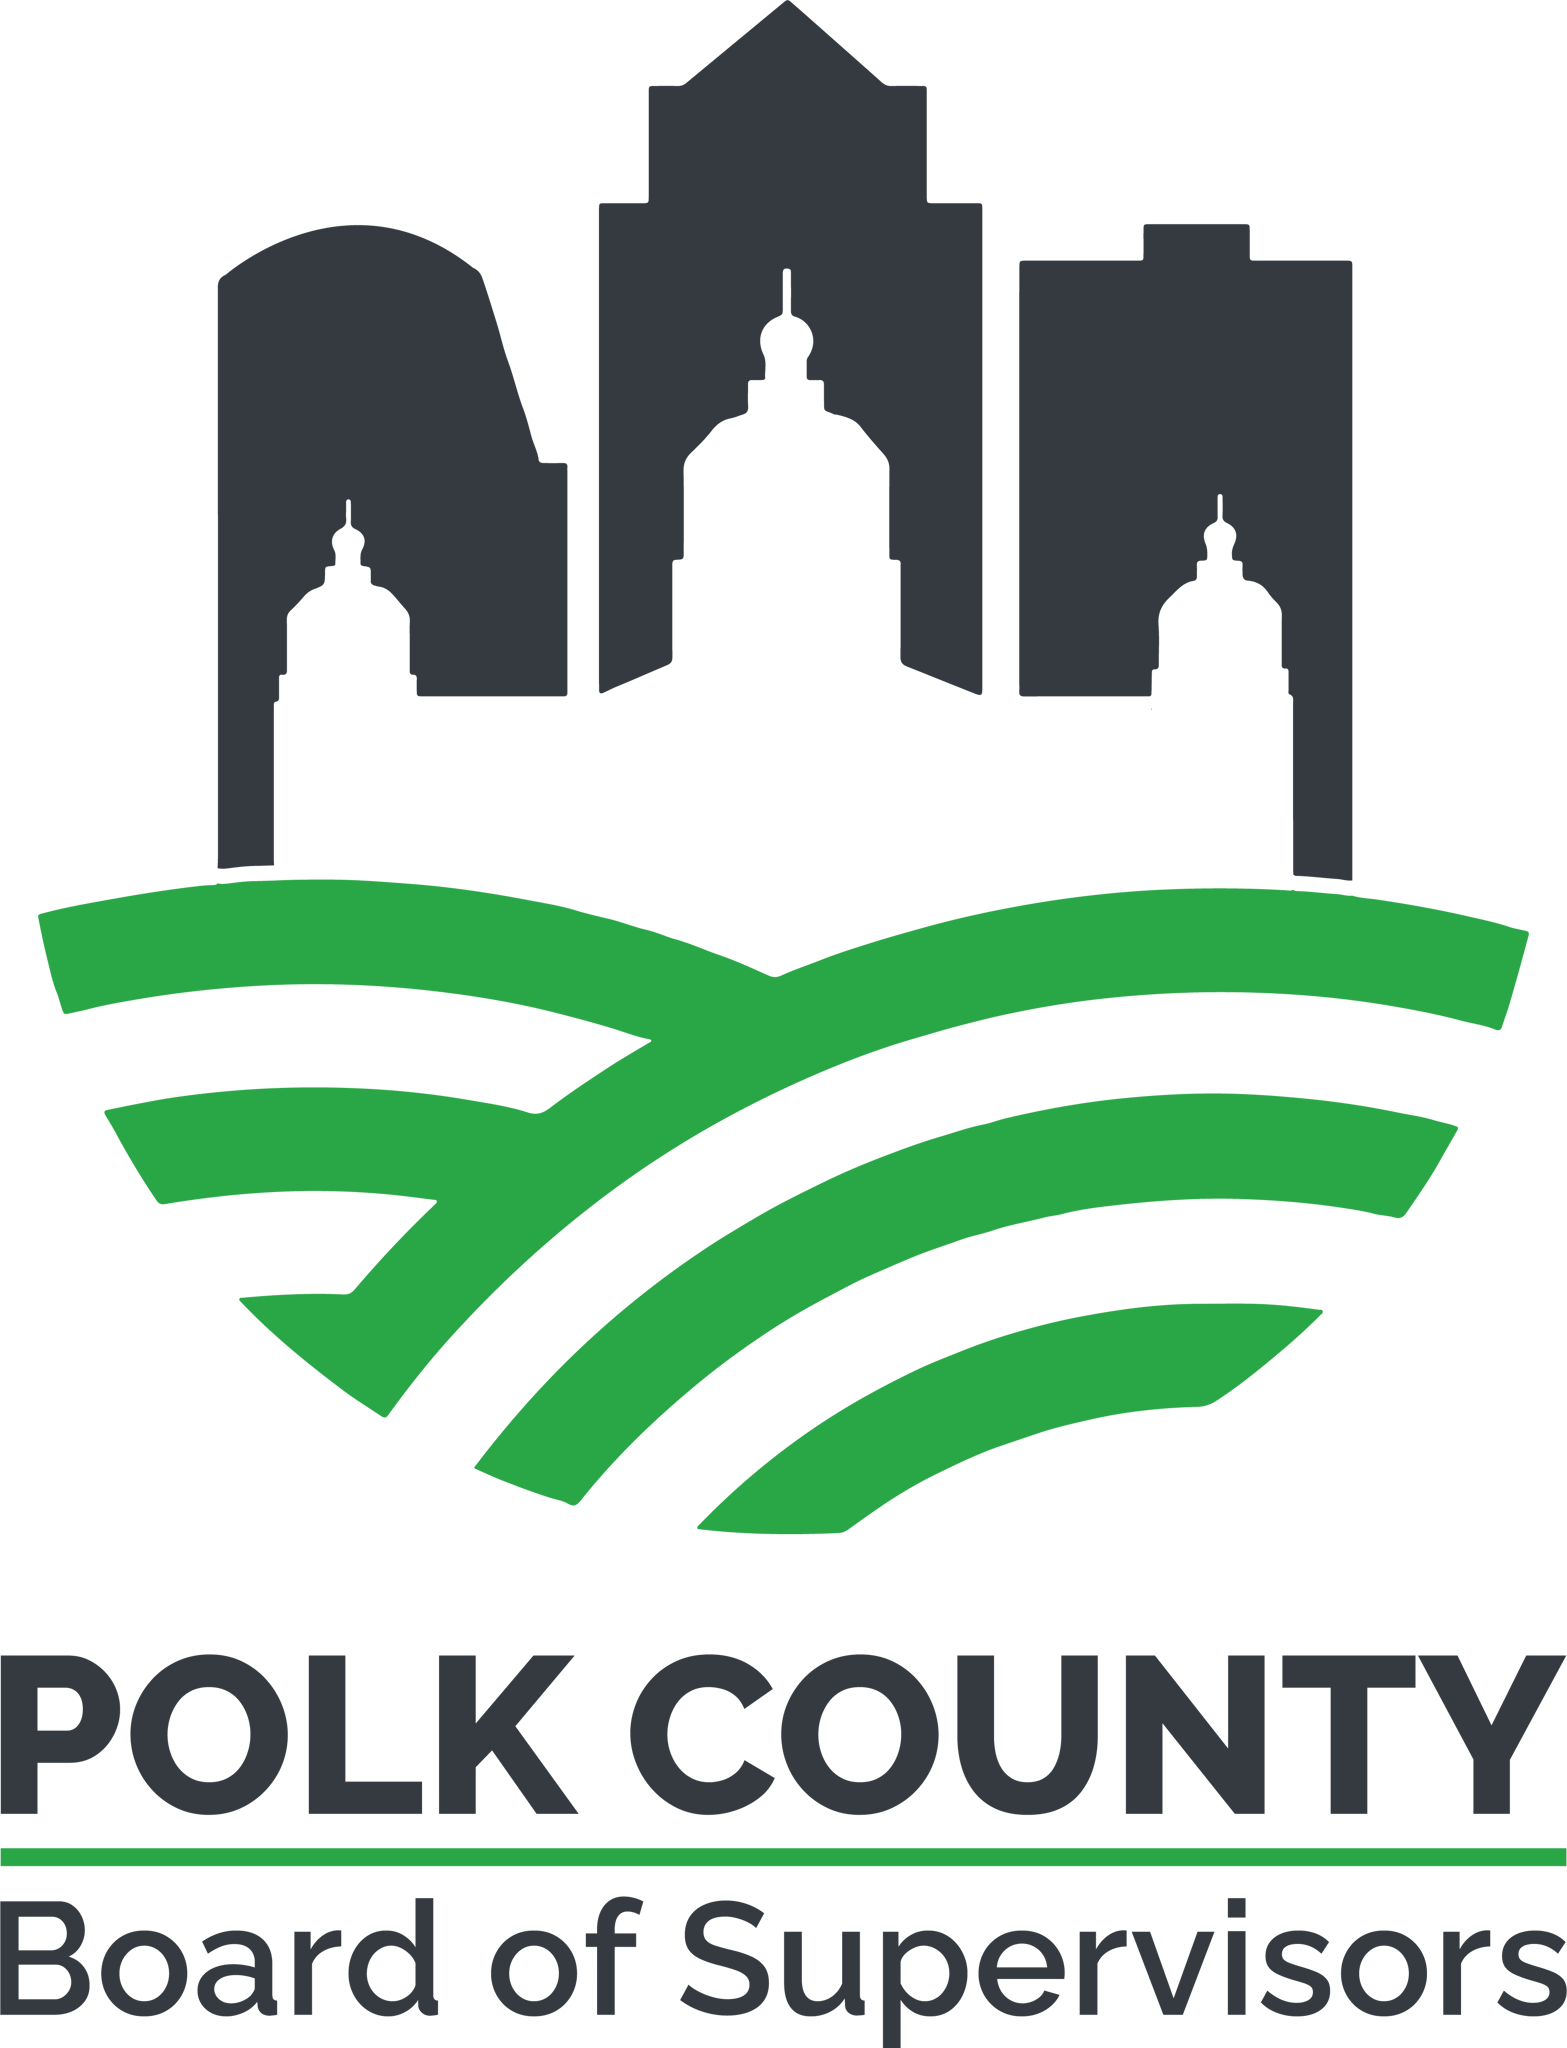 Polk County Board of Supervisors